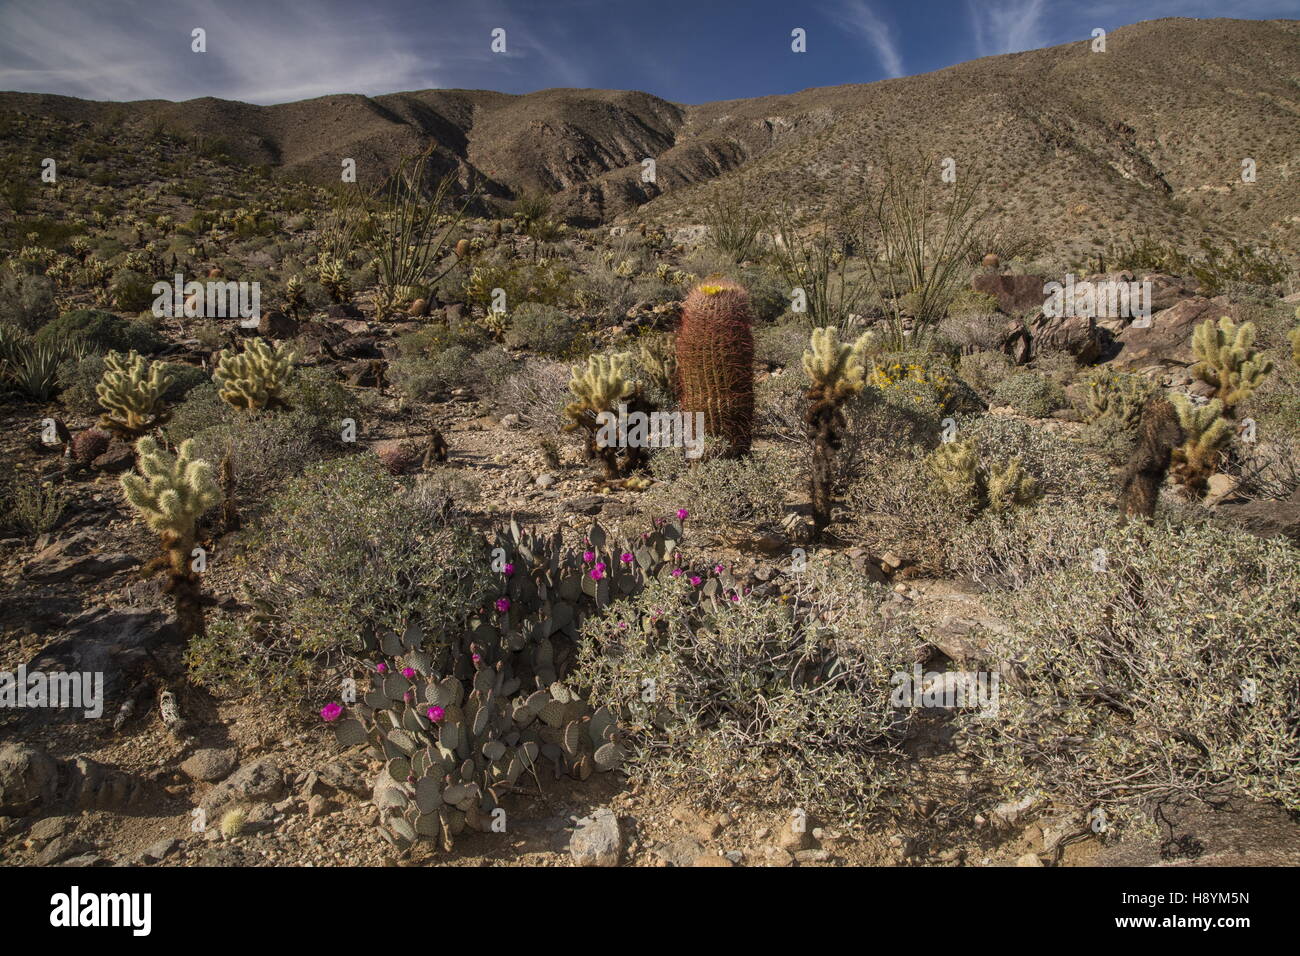 Cactus-rich slope in the Anza-Borrego Desert State Park, Sonoran Desert, California. Stock Photo